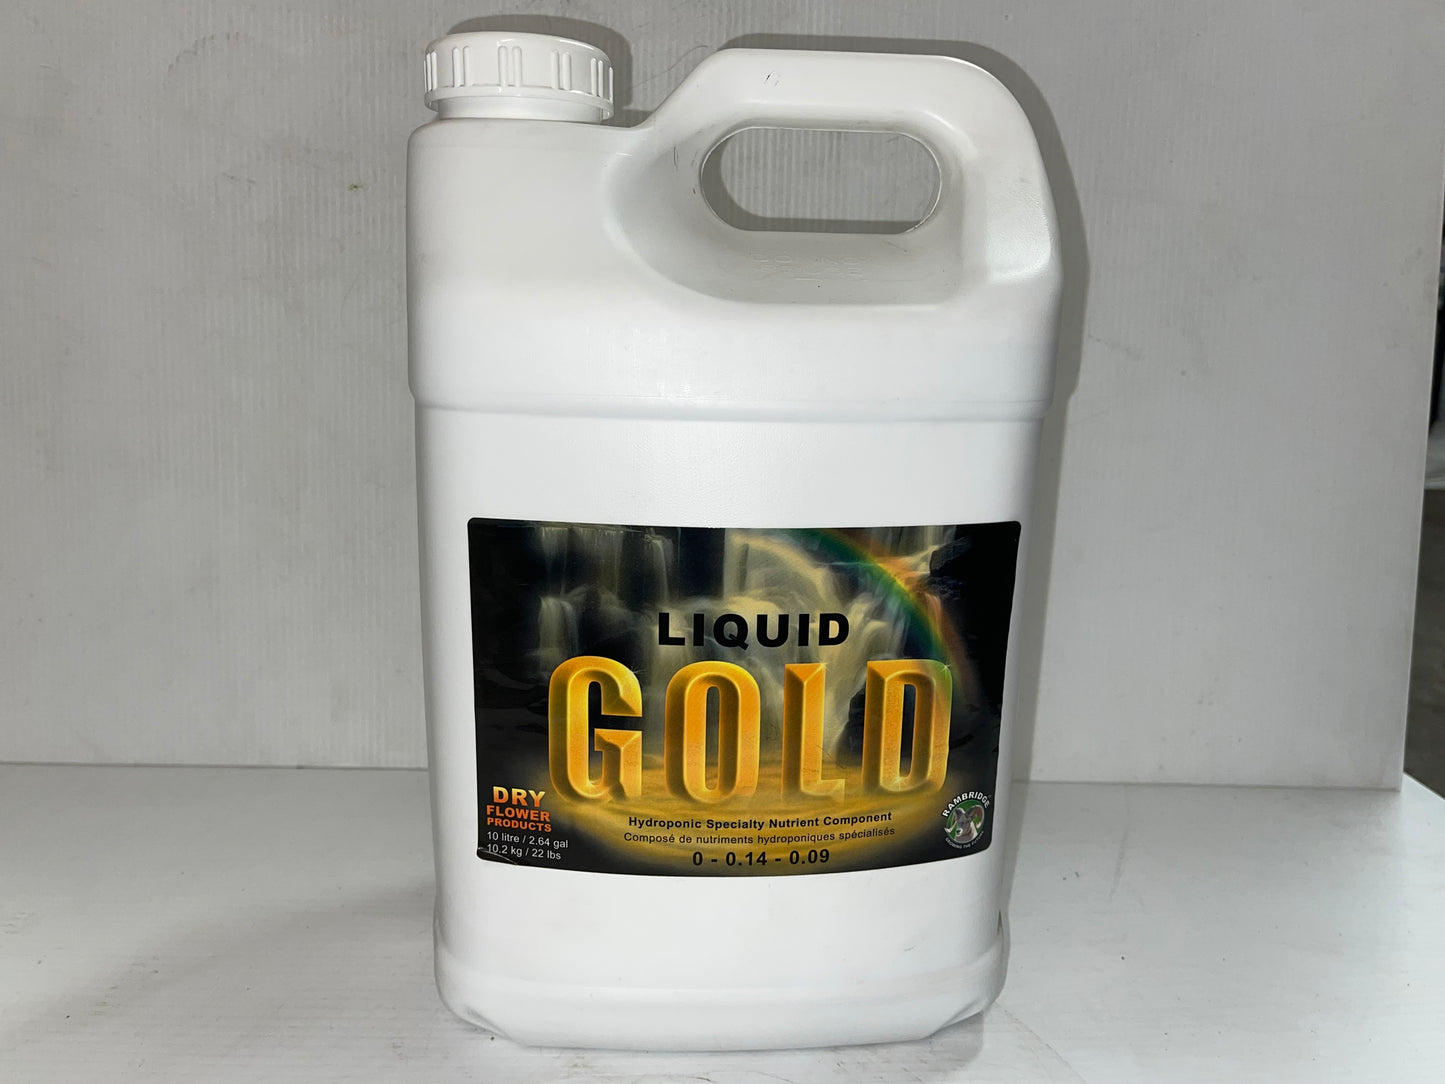 Rambridge Liquid Gold 0-0.04-0.06 10 Liter